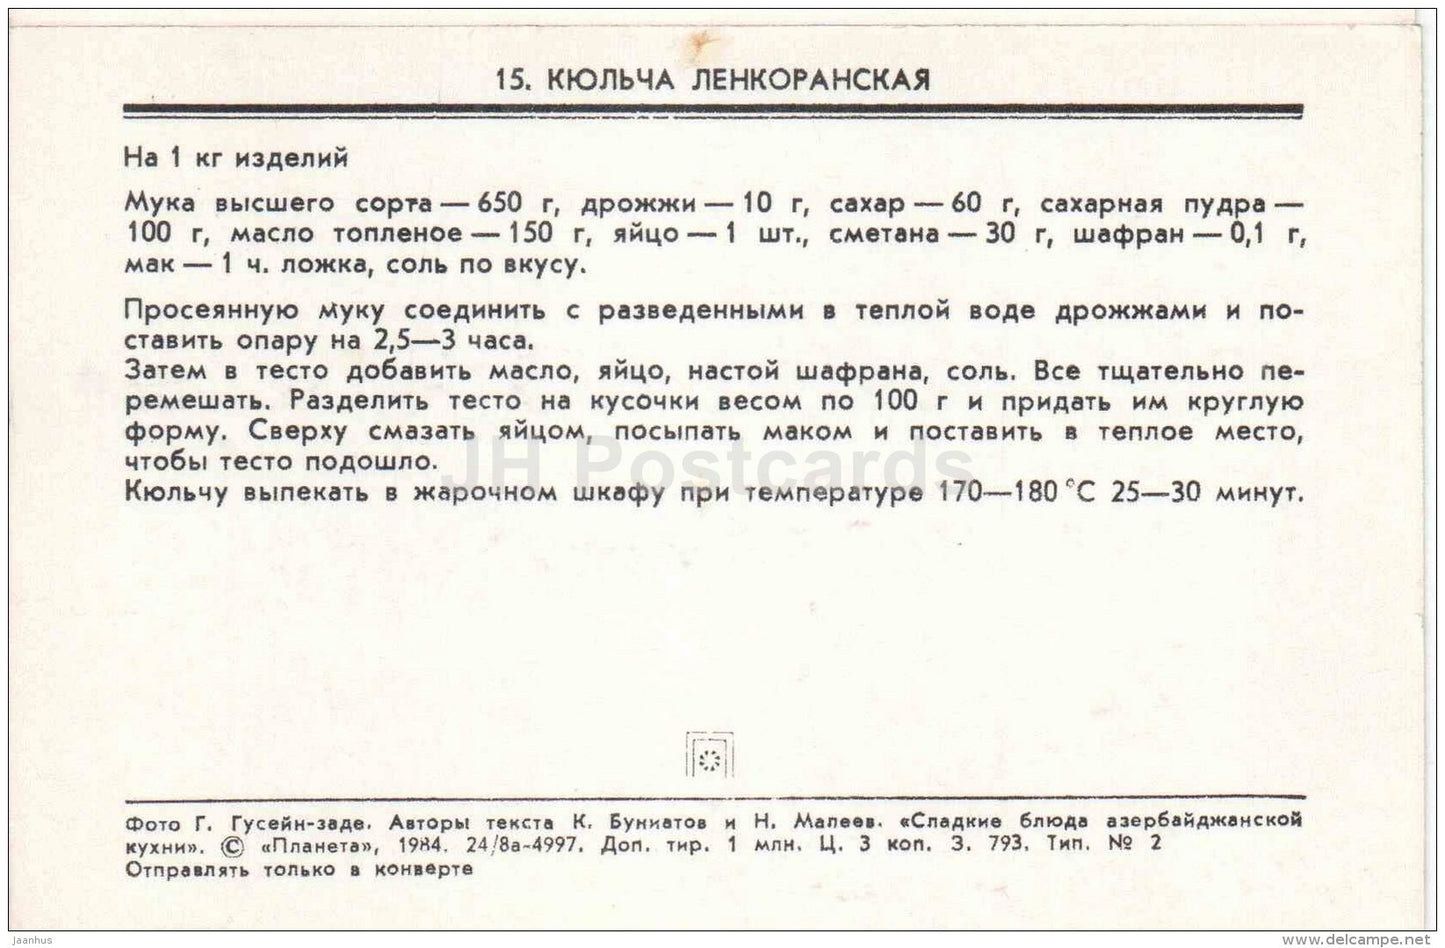 Lankaran kulcha - pastry - dishes - Azerbaijan dessert - cuisine - 1984 - Russia USSR - unused - JH Postcards